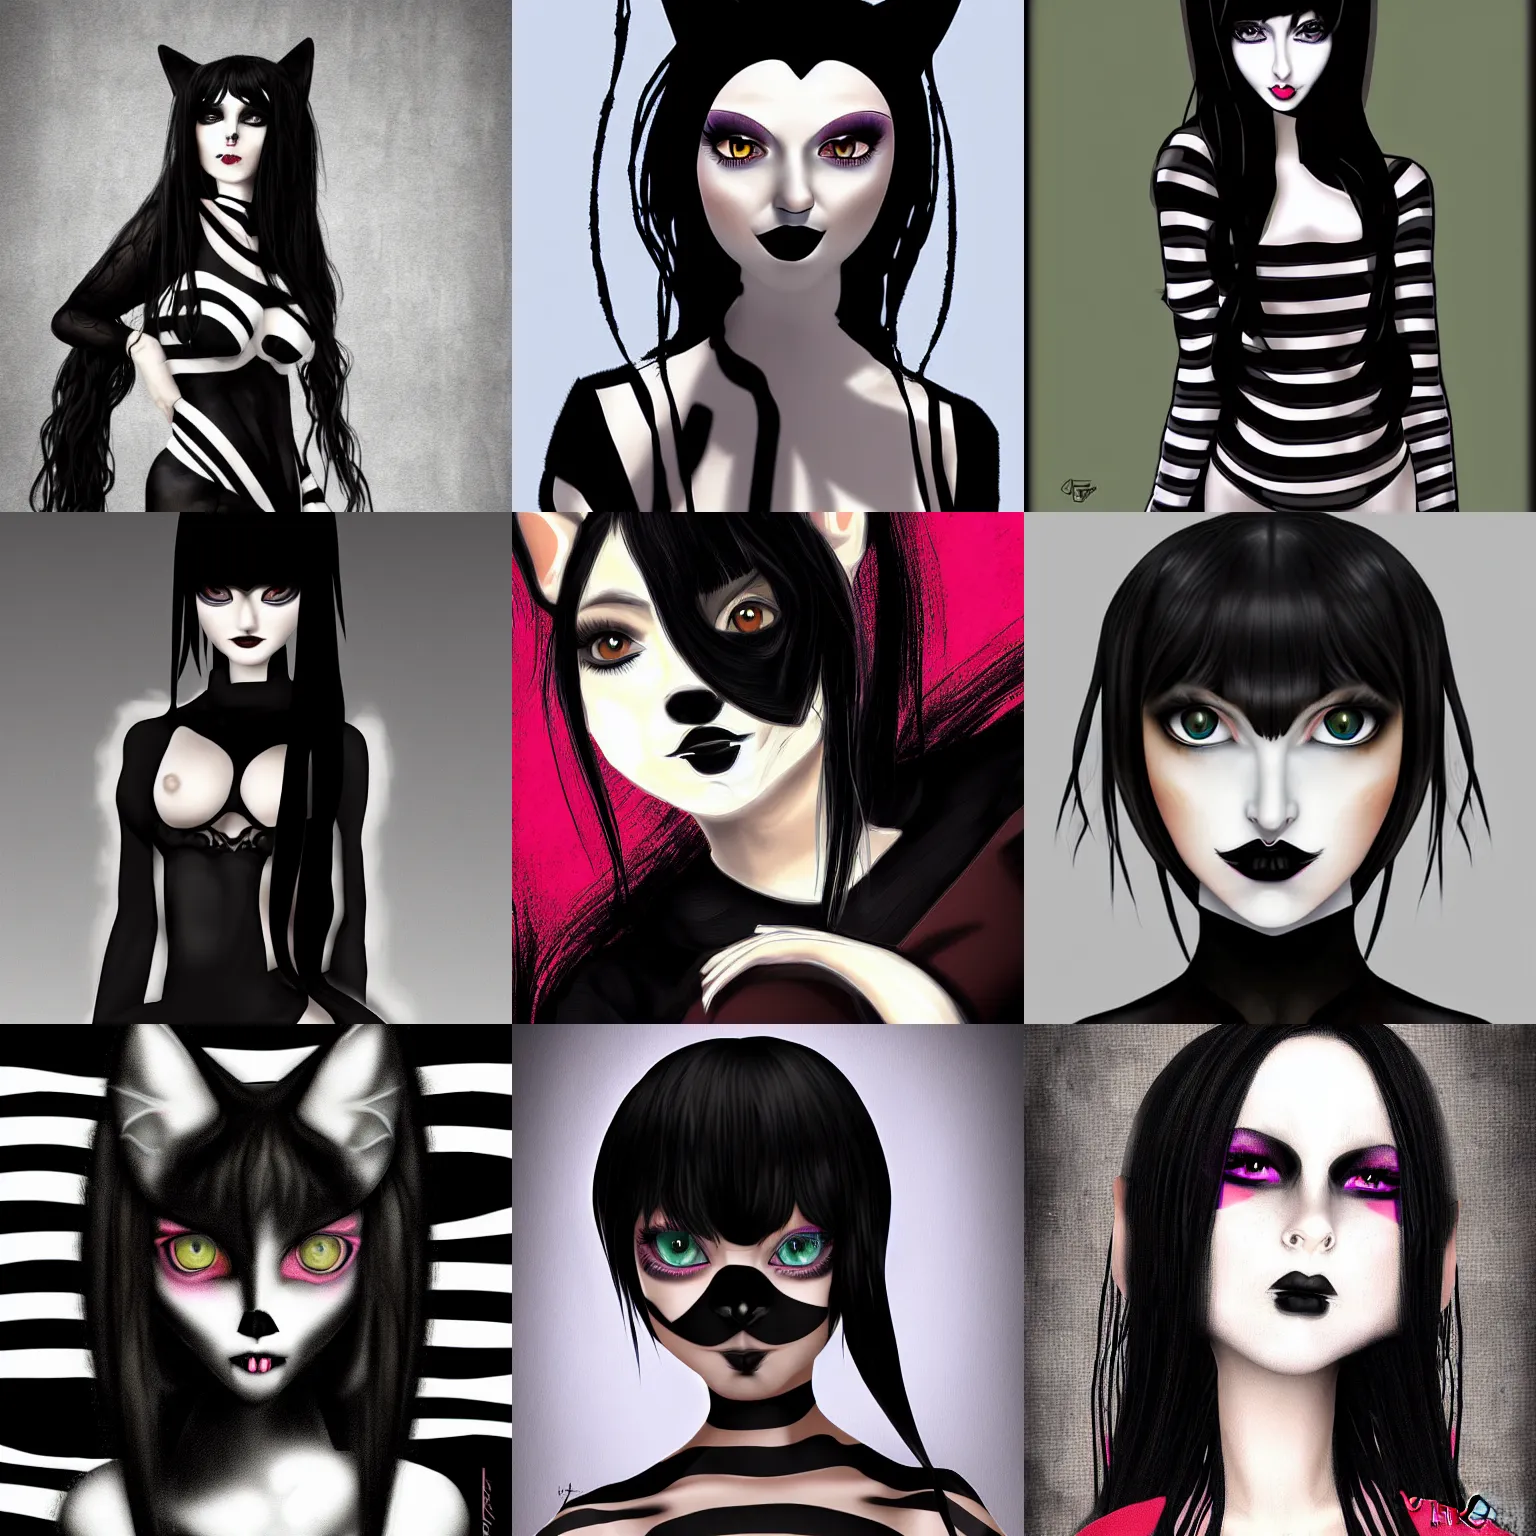 Prompt: portrait of a goth catgirl, black t - shirt, striped pantyhose, digital art by victoria frances